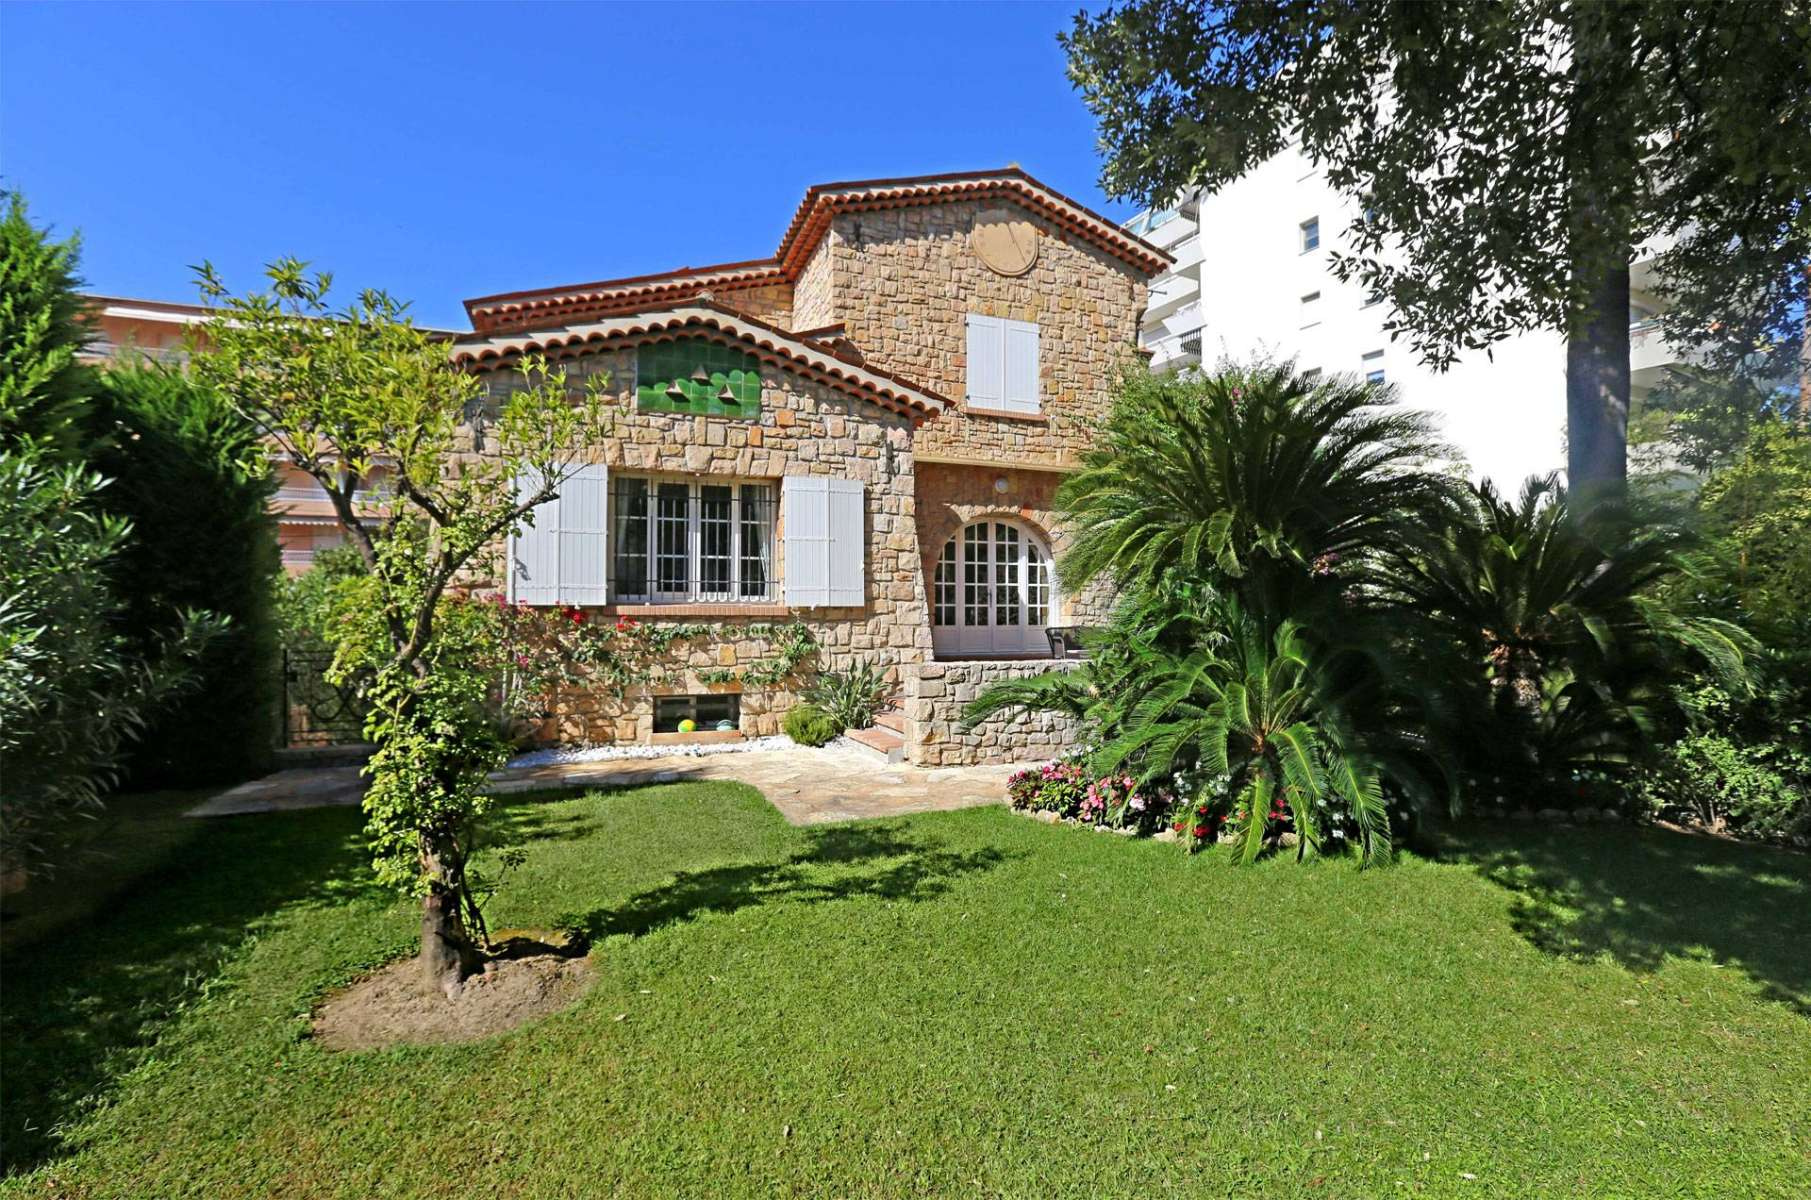 Rent villa in Cannes close to Croisette